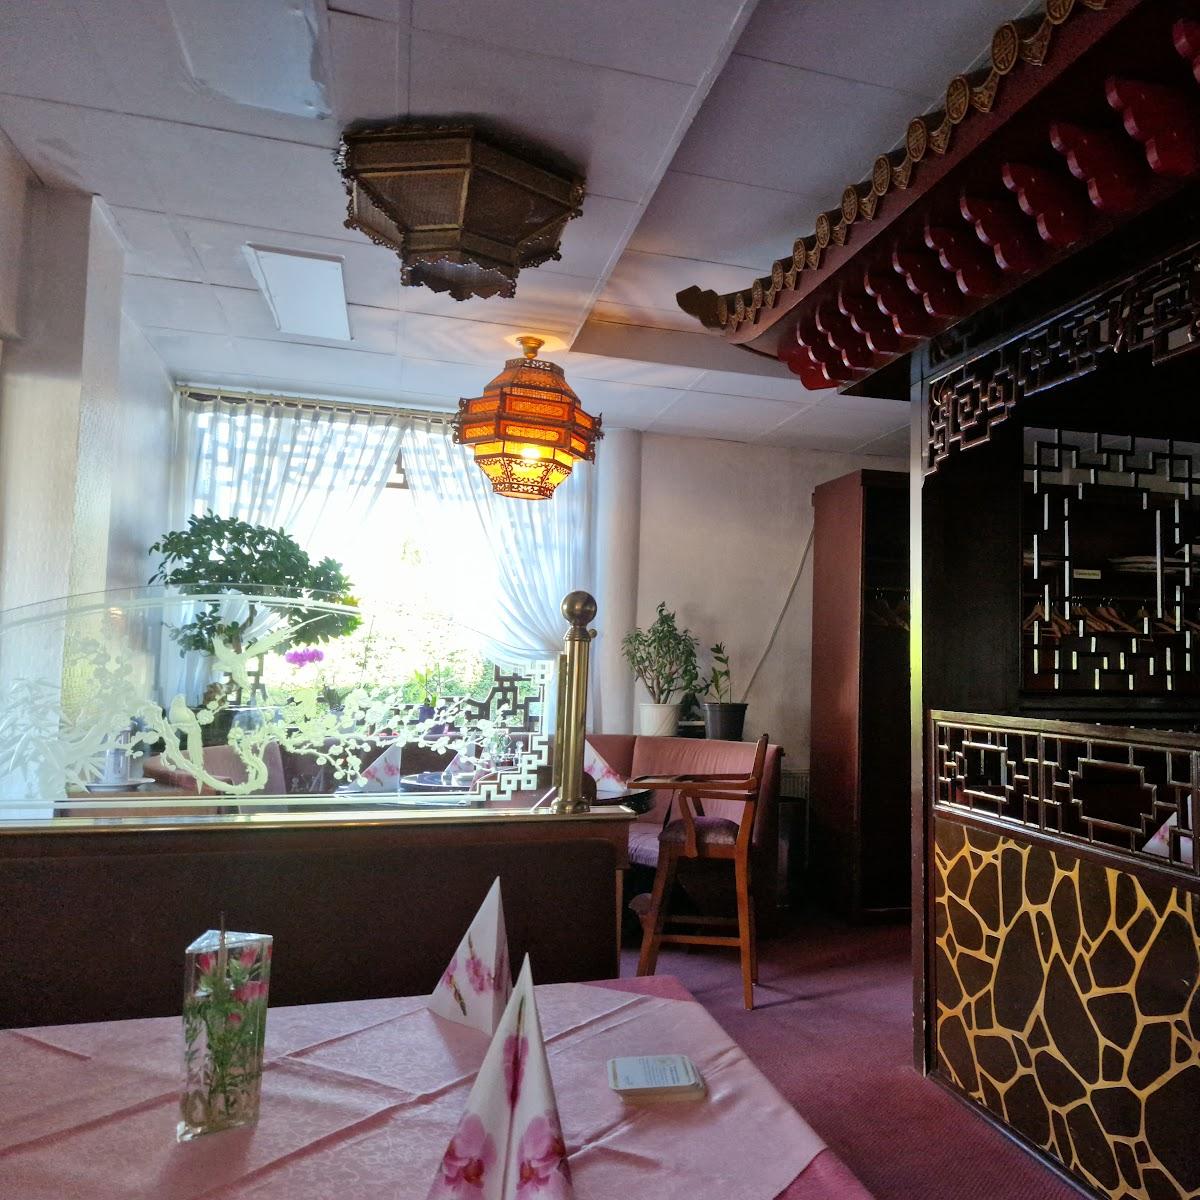 Restaurant "China Restaurant Kanton" in Koblenz